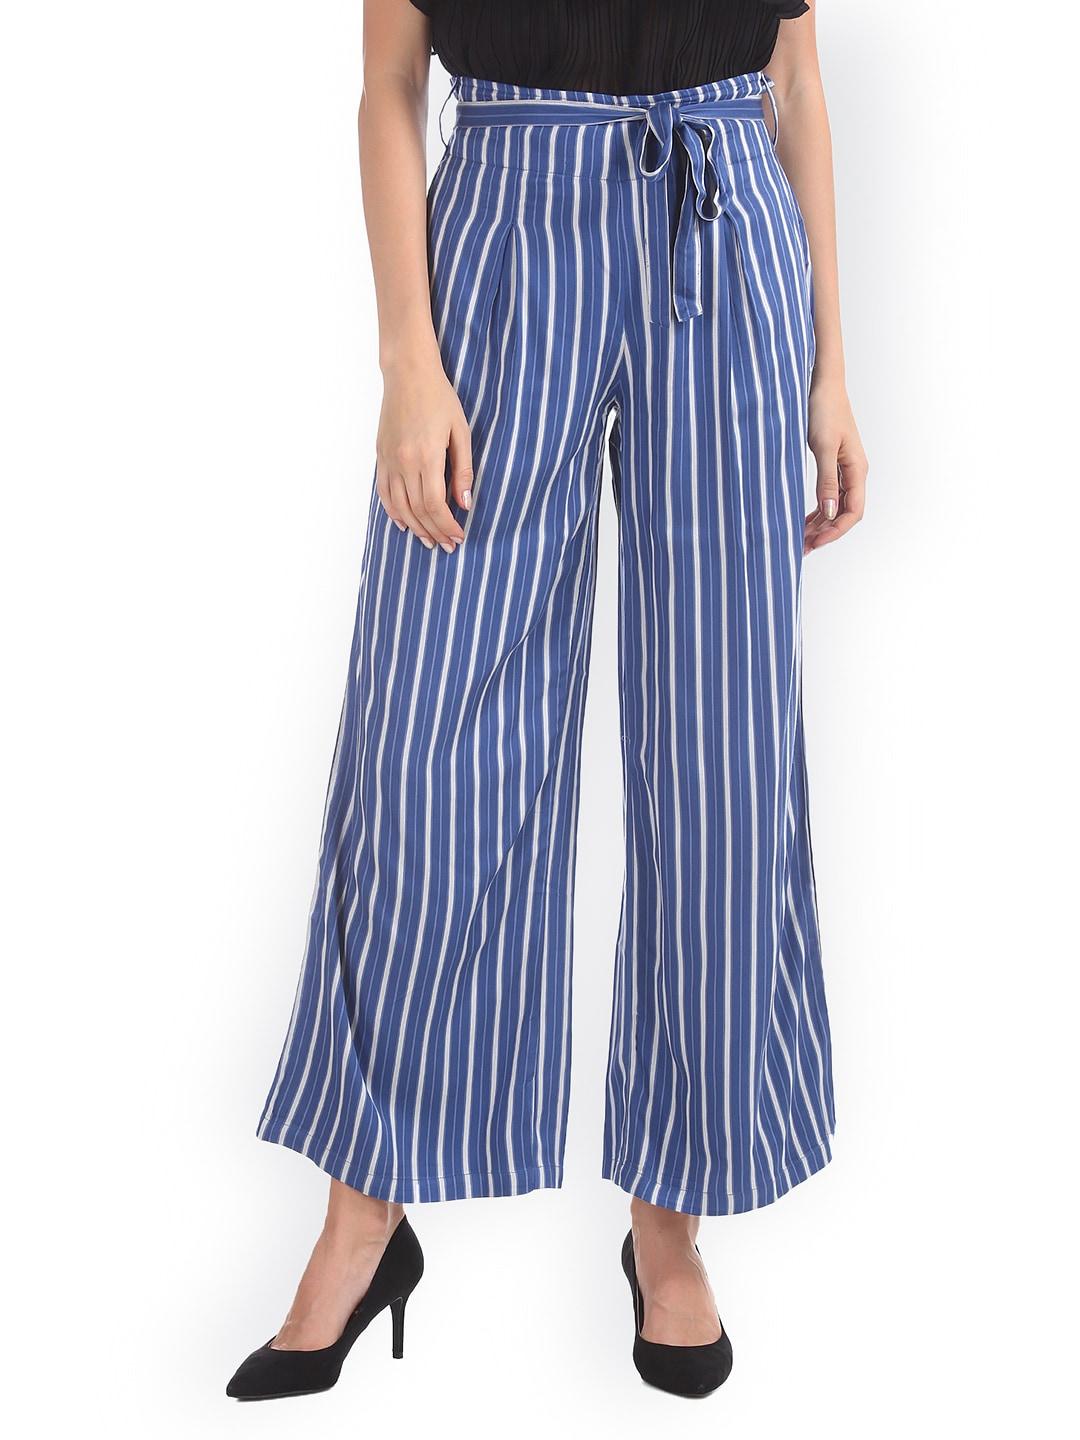 u.s. polo assn. women women navy blue & white flared striped parallel trousers